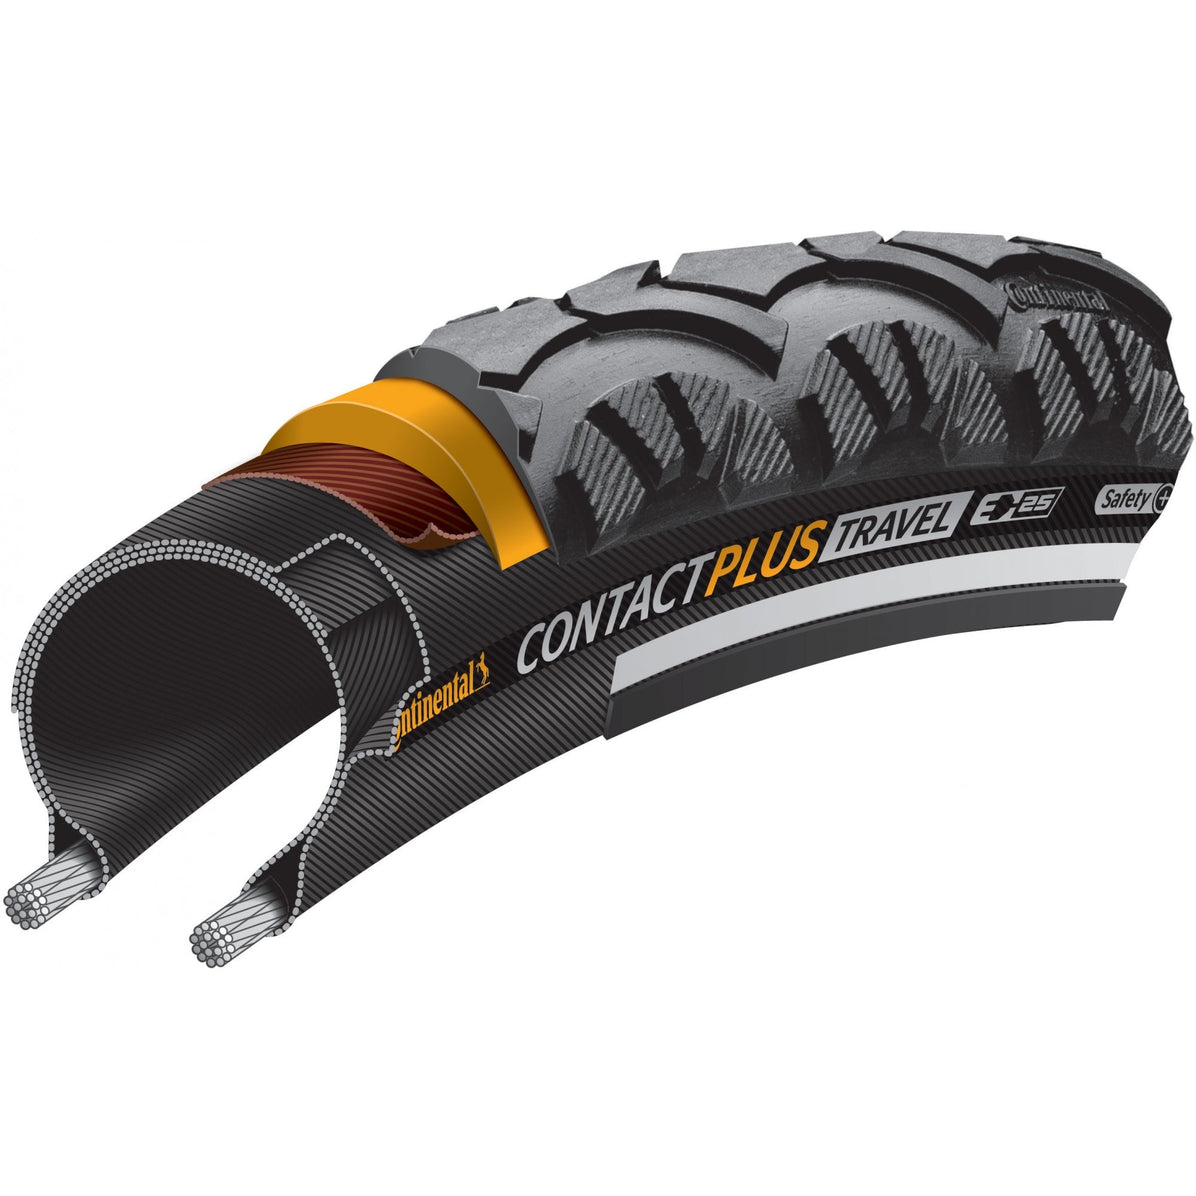 Continental Contact Plus Travel Reflex Tyre 700 x 37C